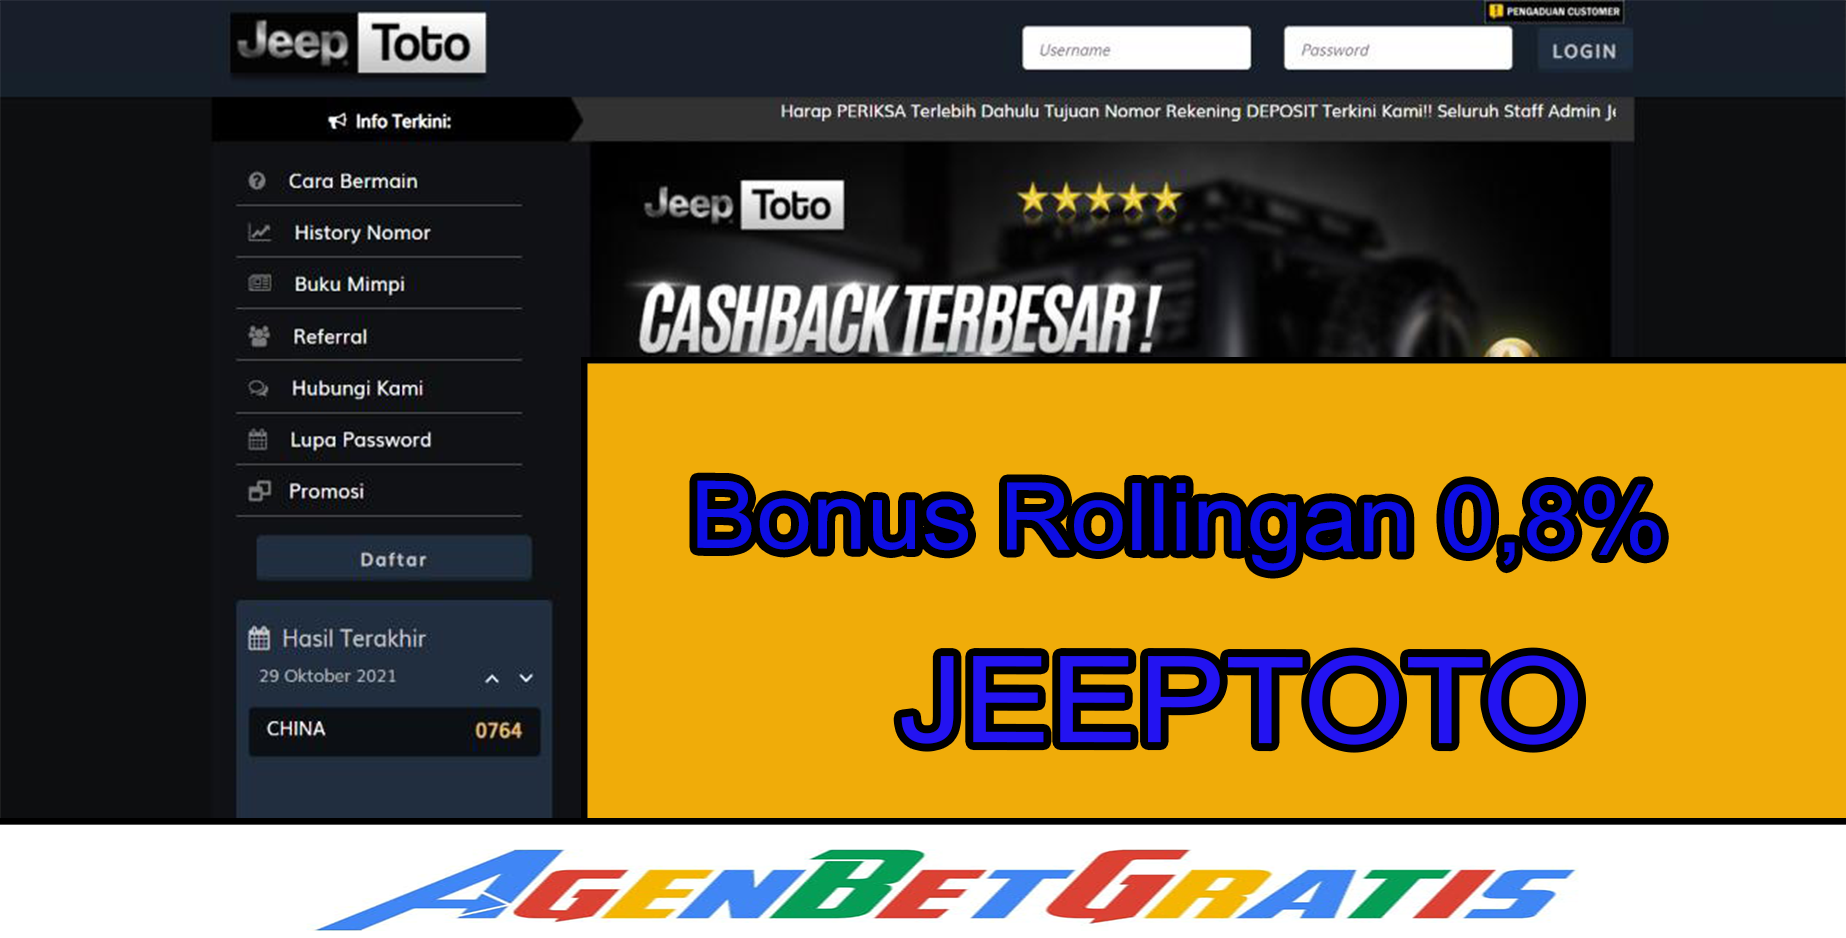 JEEPTOTO - Bonus Rollingan 0,8%